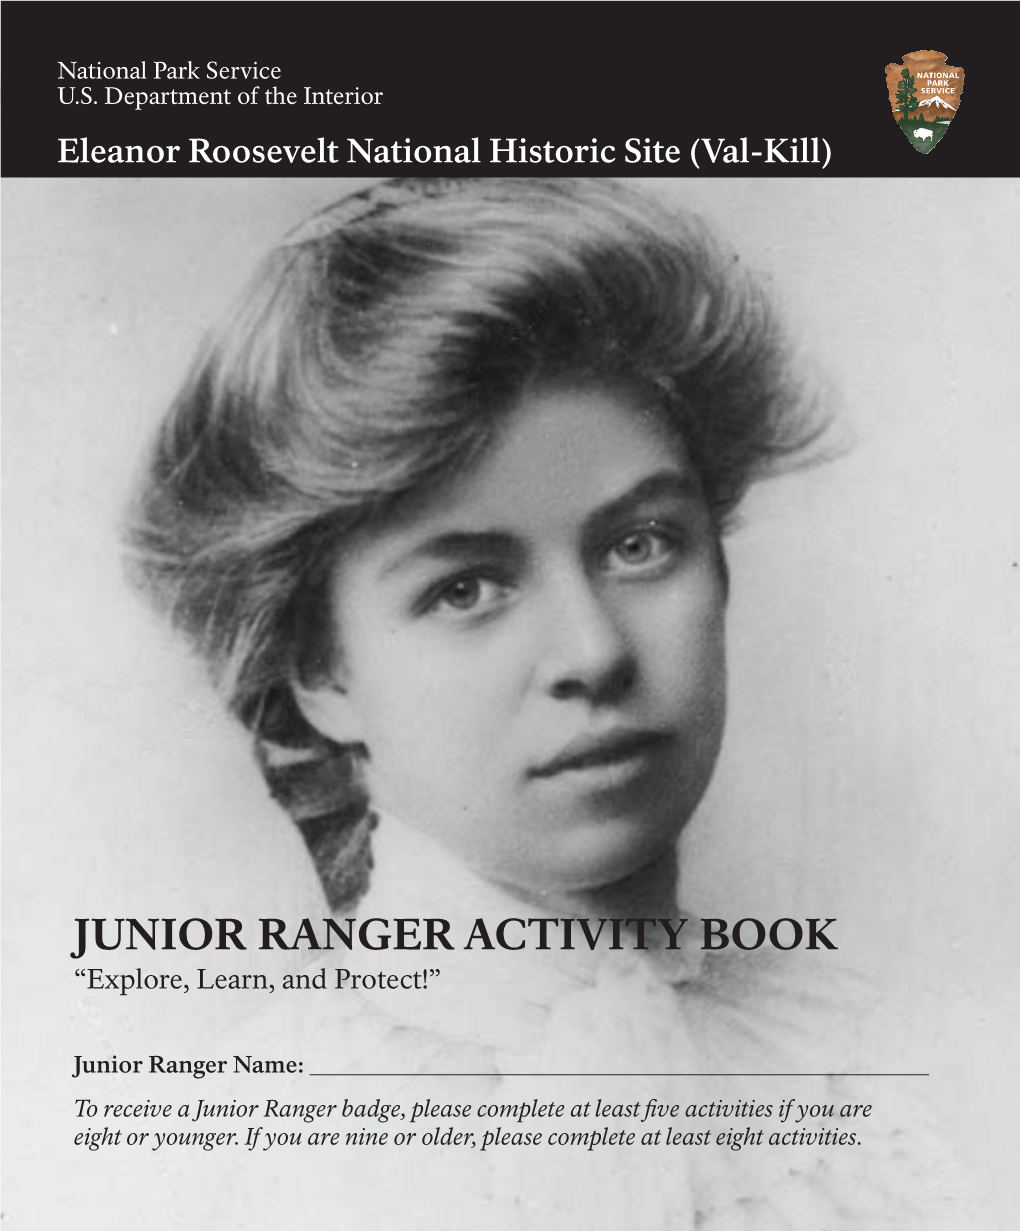 Junior Ranger Activity Book, Eleanor Roosevelt National Historic Site